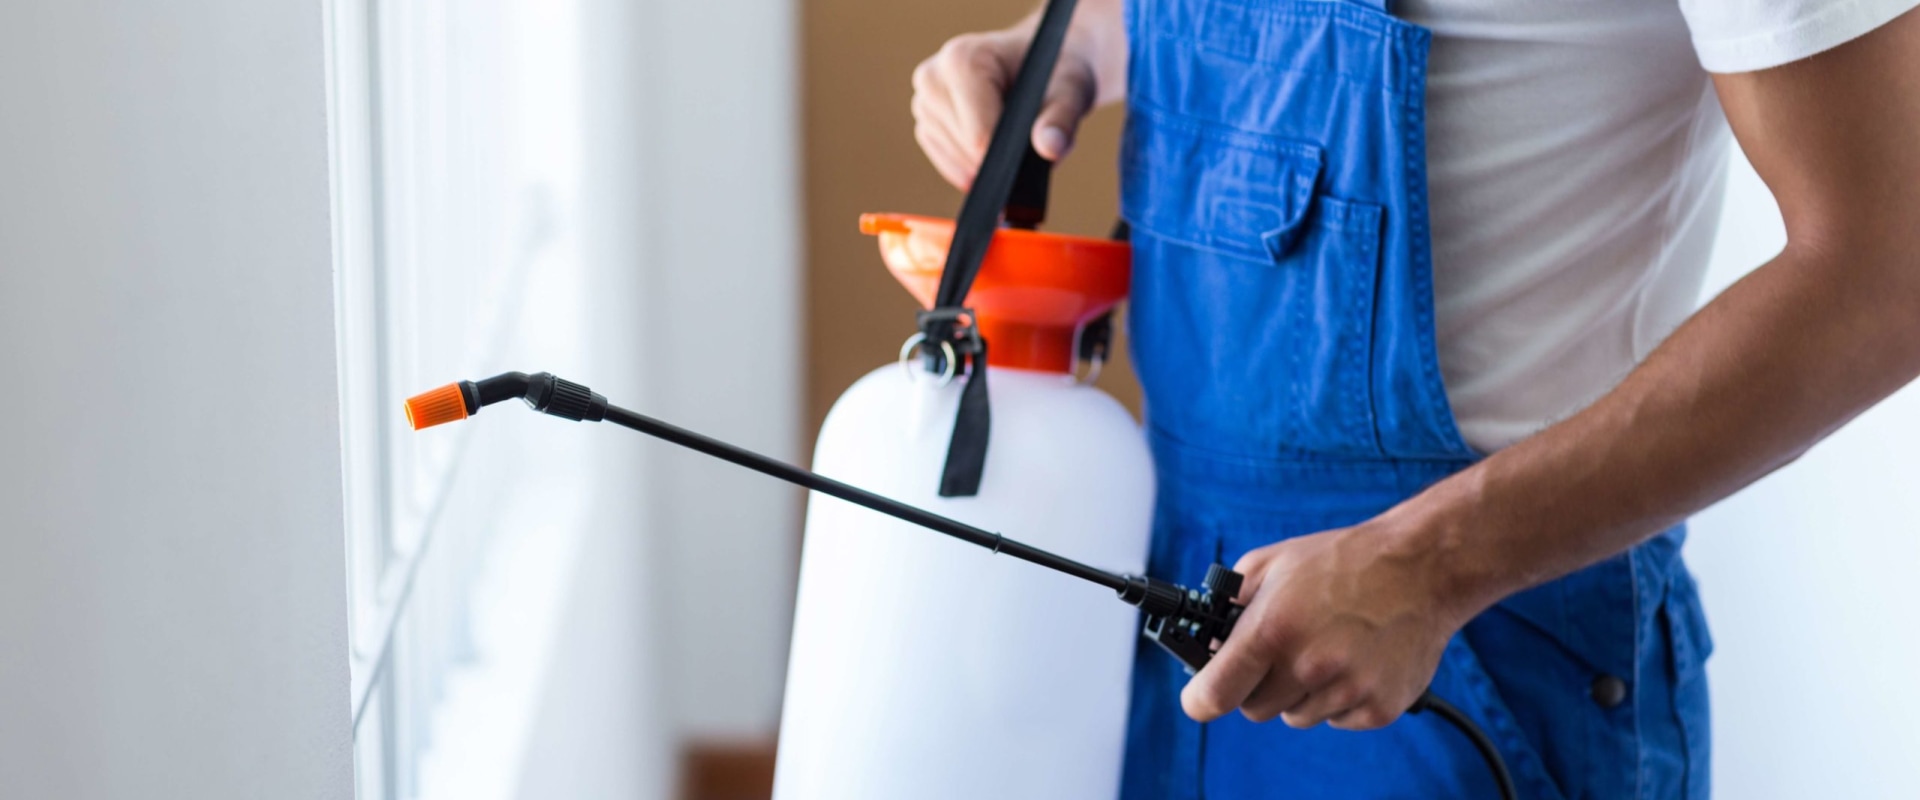 Is pest control spray safe to breathe?